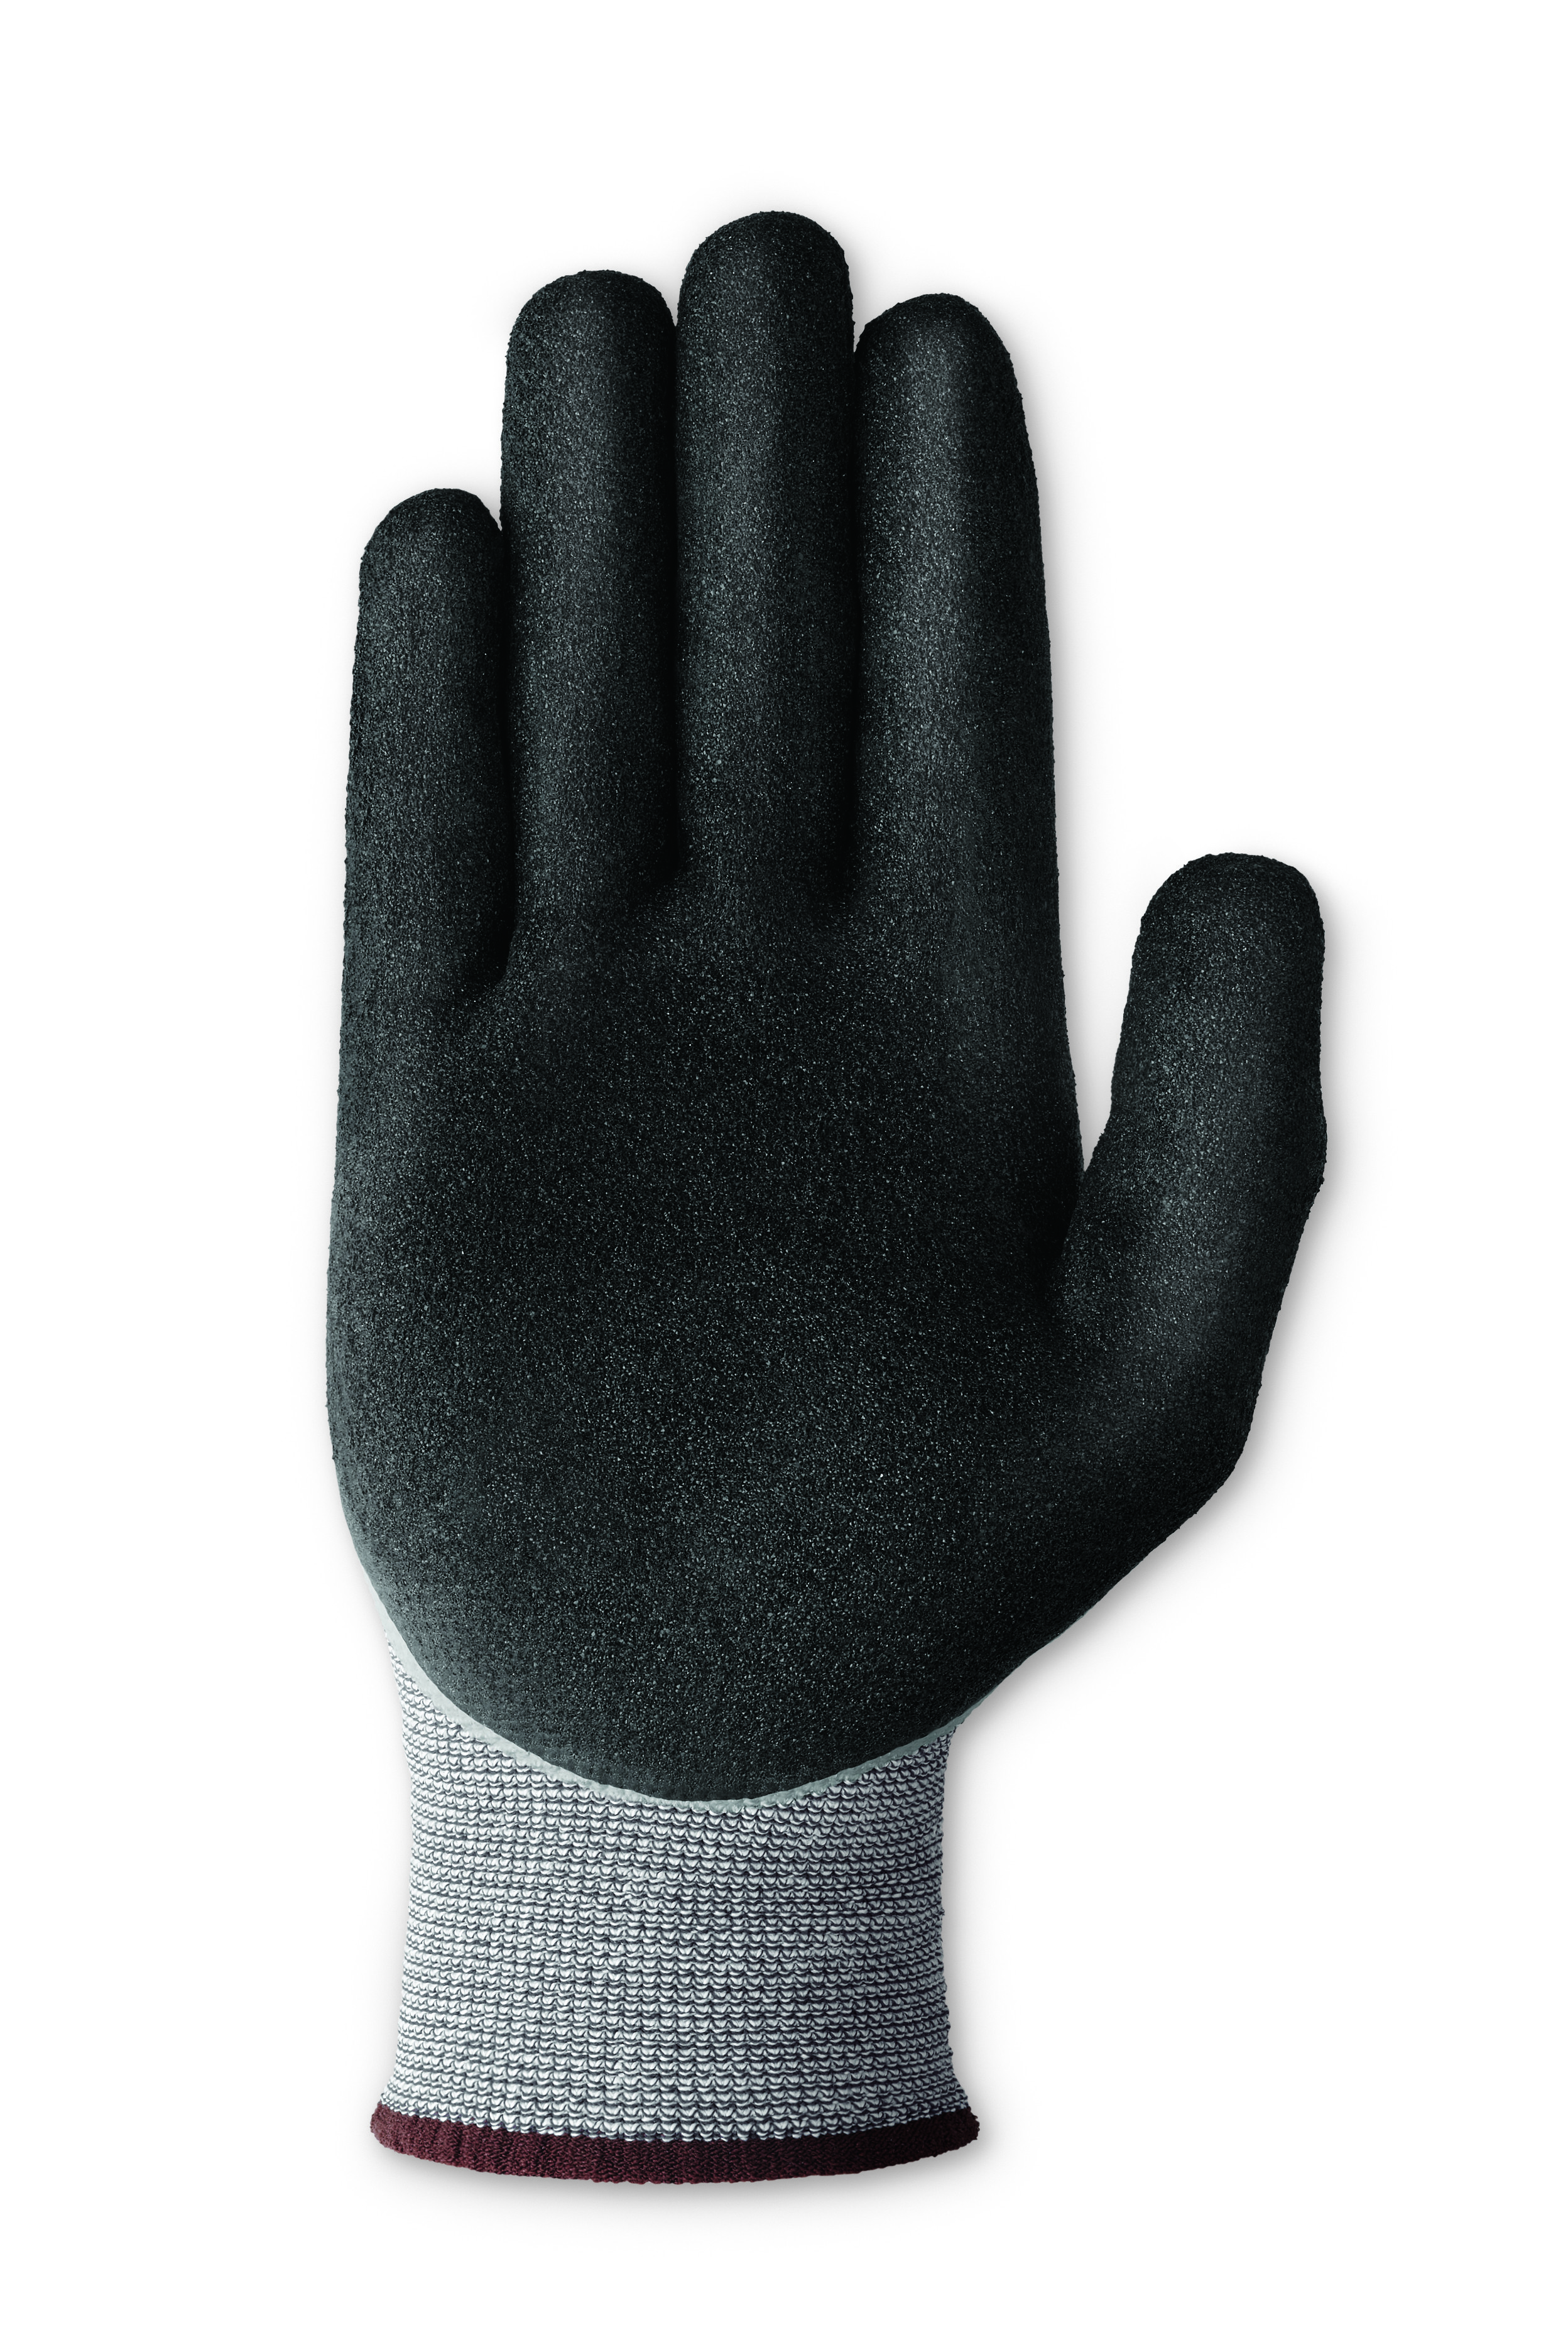 Ansell - HyFlex 11-927 Handschuh